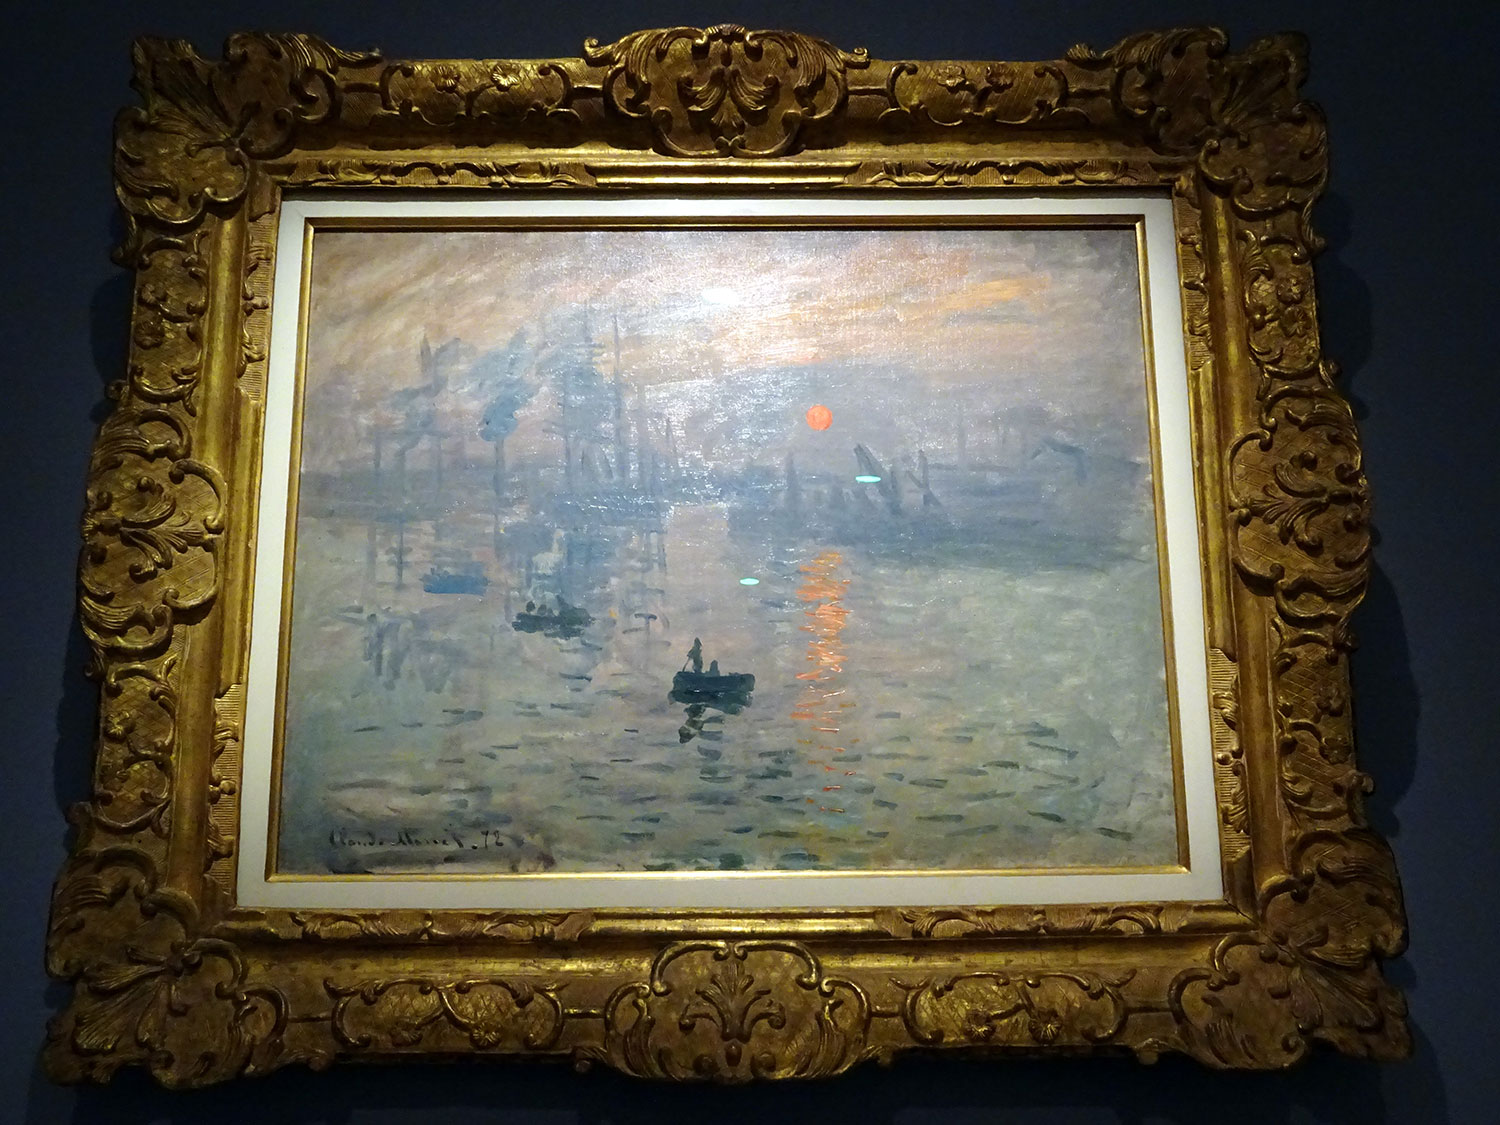 Claude Monet, Impression, Soleil Levant, 1872